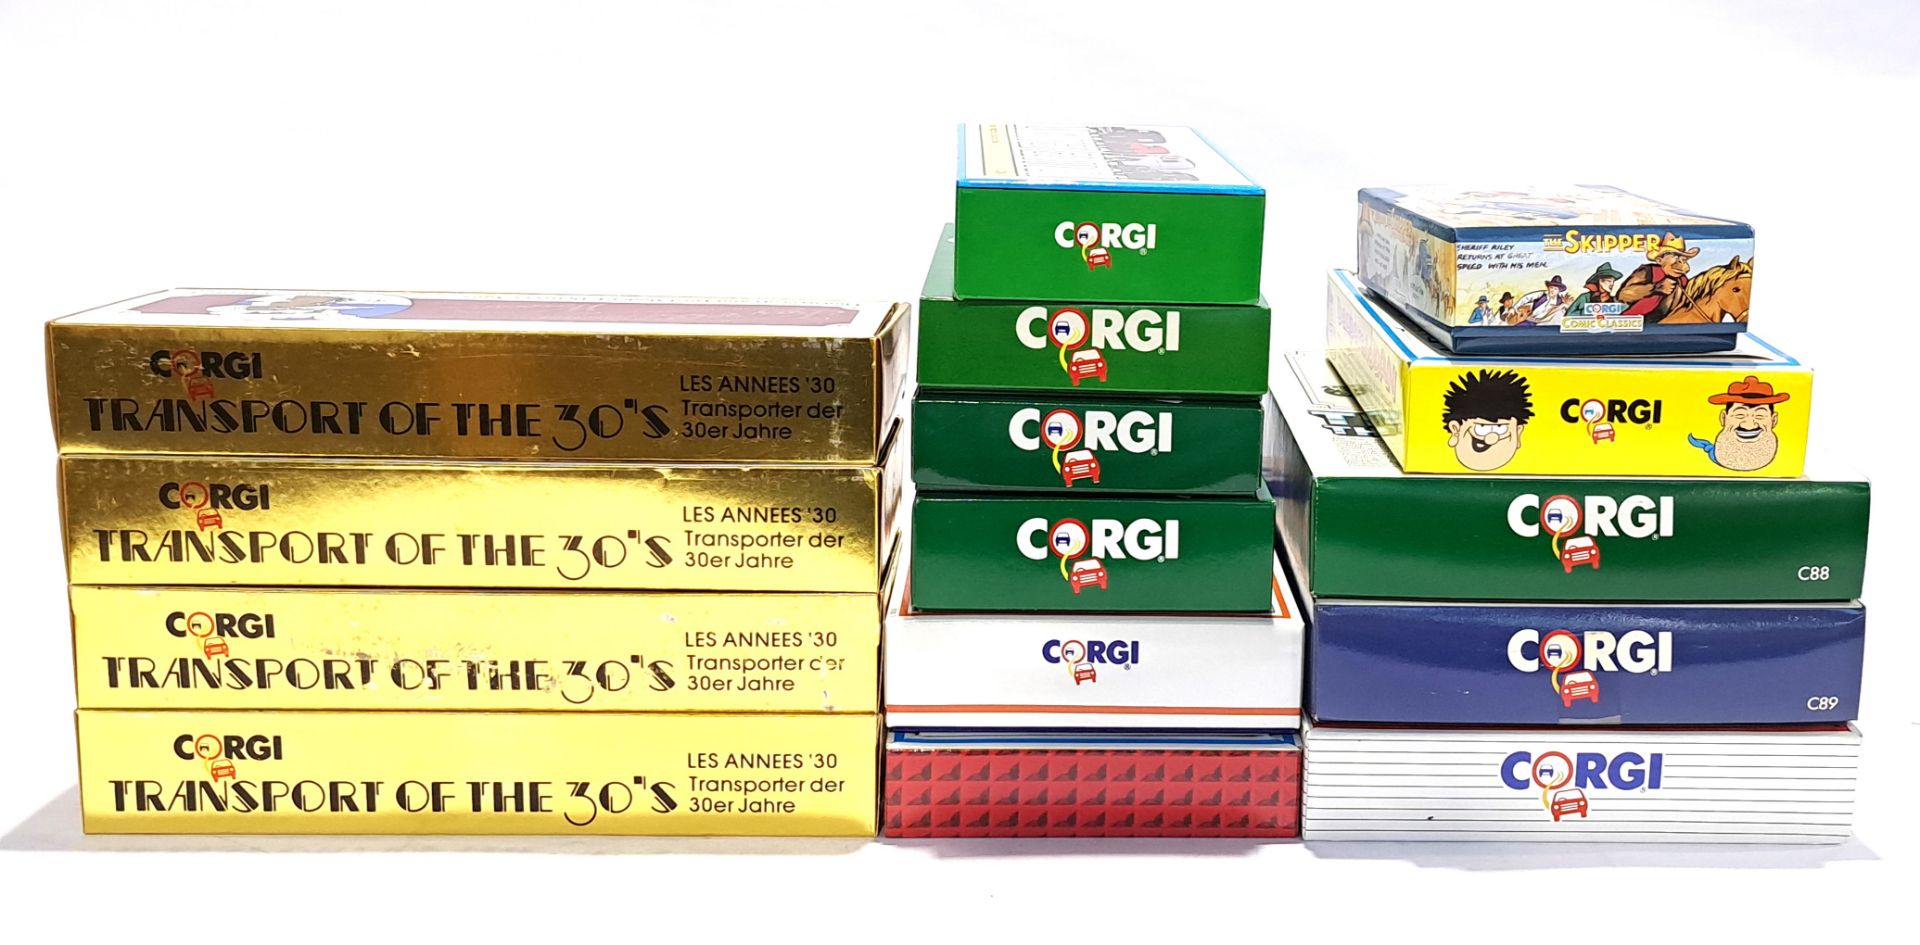 Corgi, a boxed Commercials group